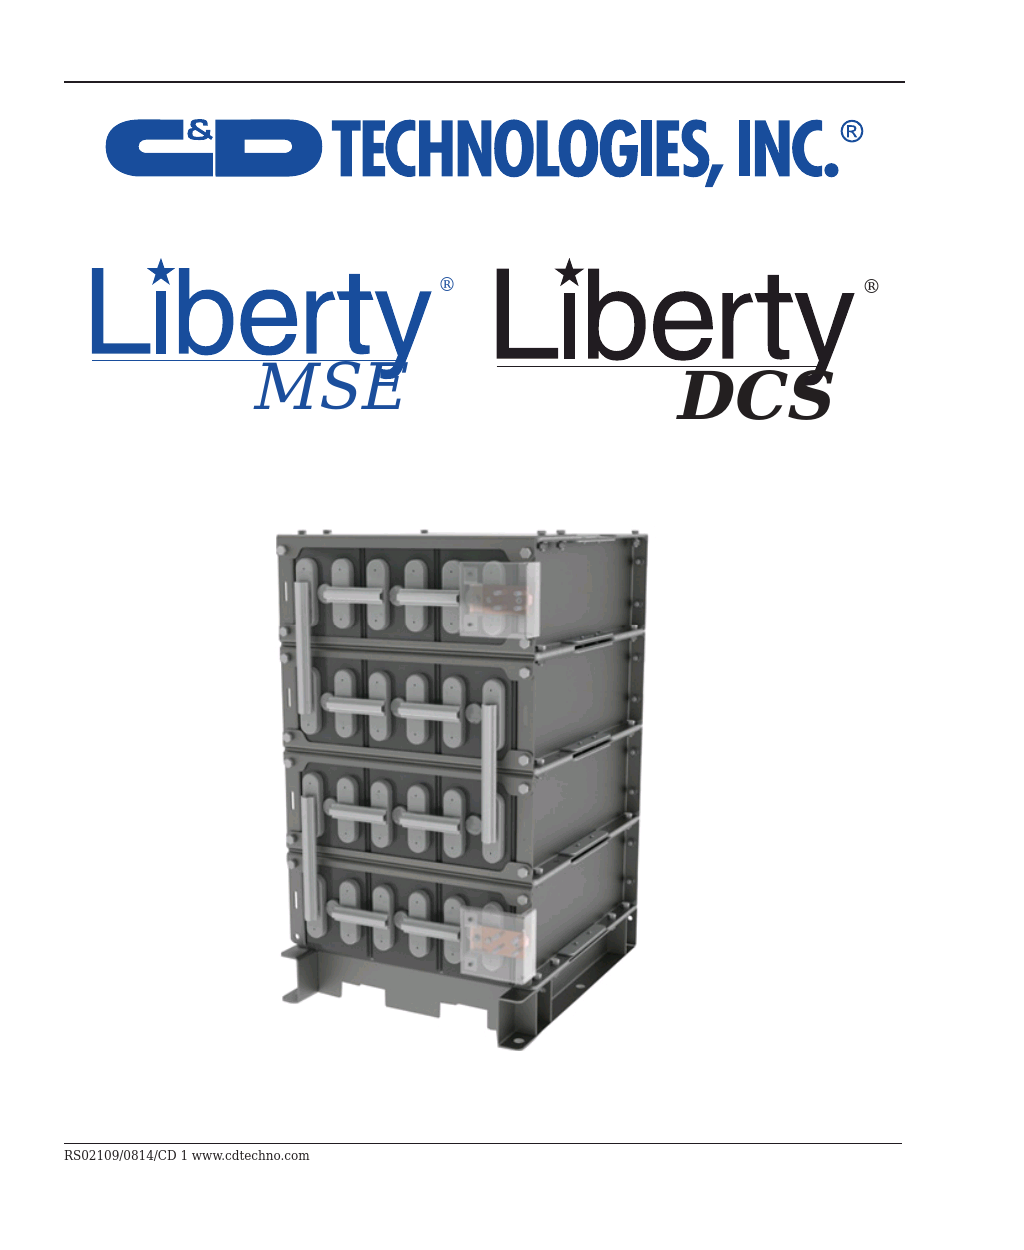 RS-2109 Liberty MSE / Liberty DCS